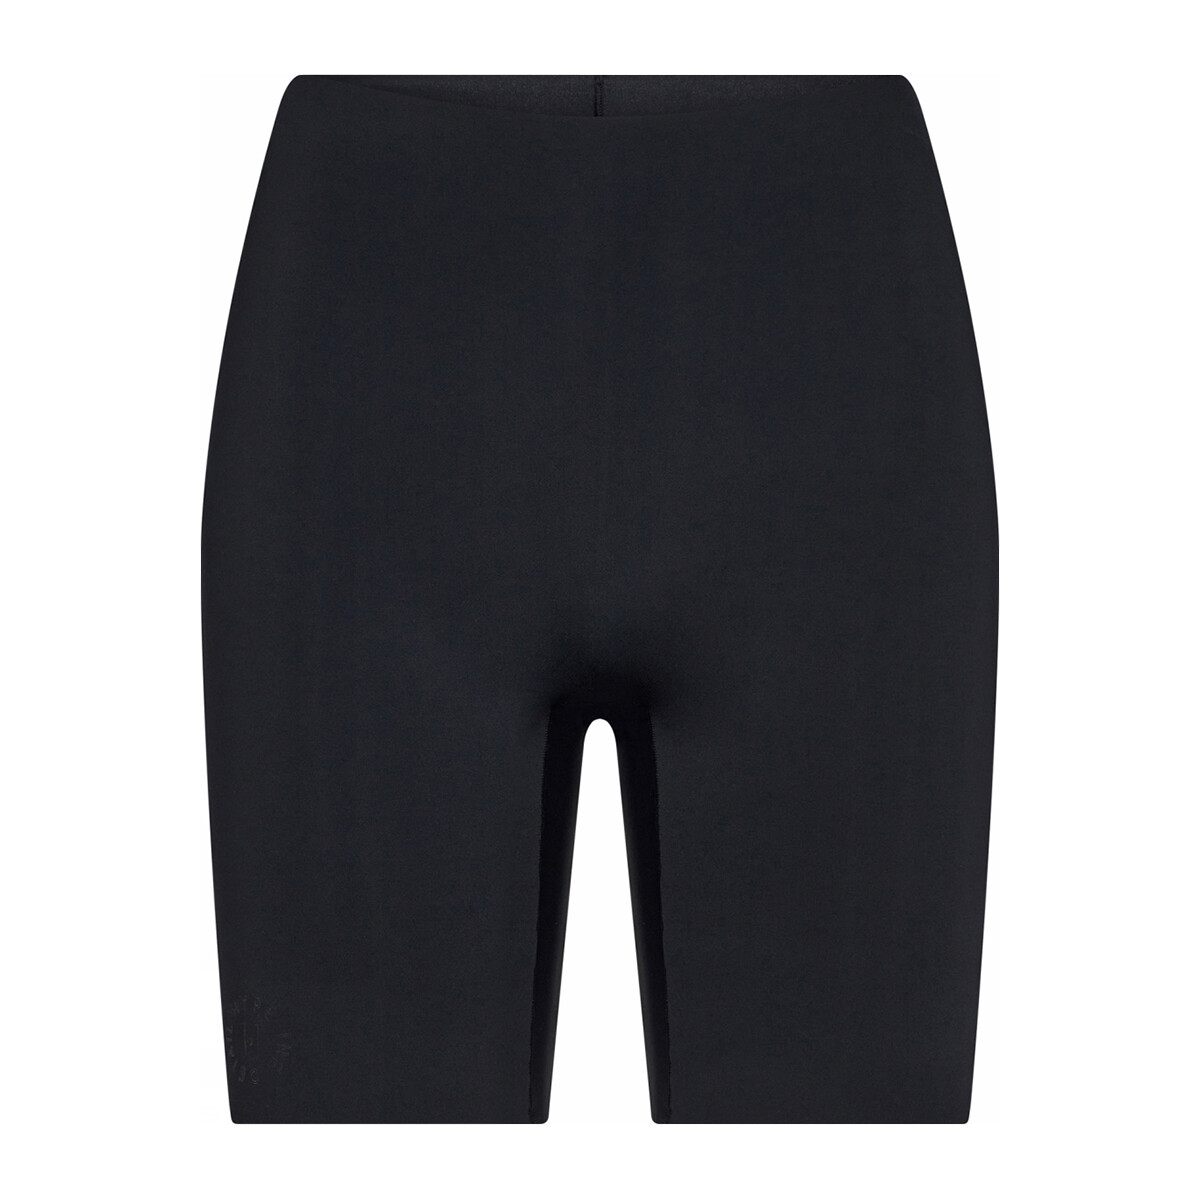 Se Hype The Detail Essentials Shorts, Farve: Sort, Størrelse: S, Dame hos Netlingeri.dk